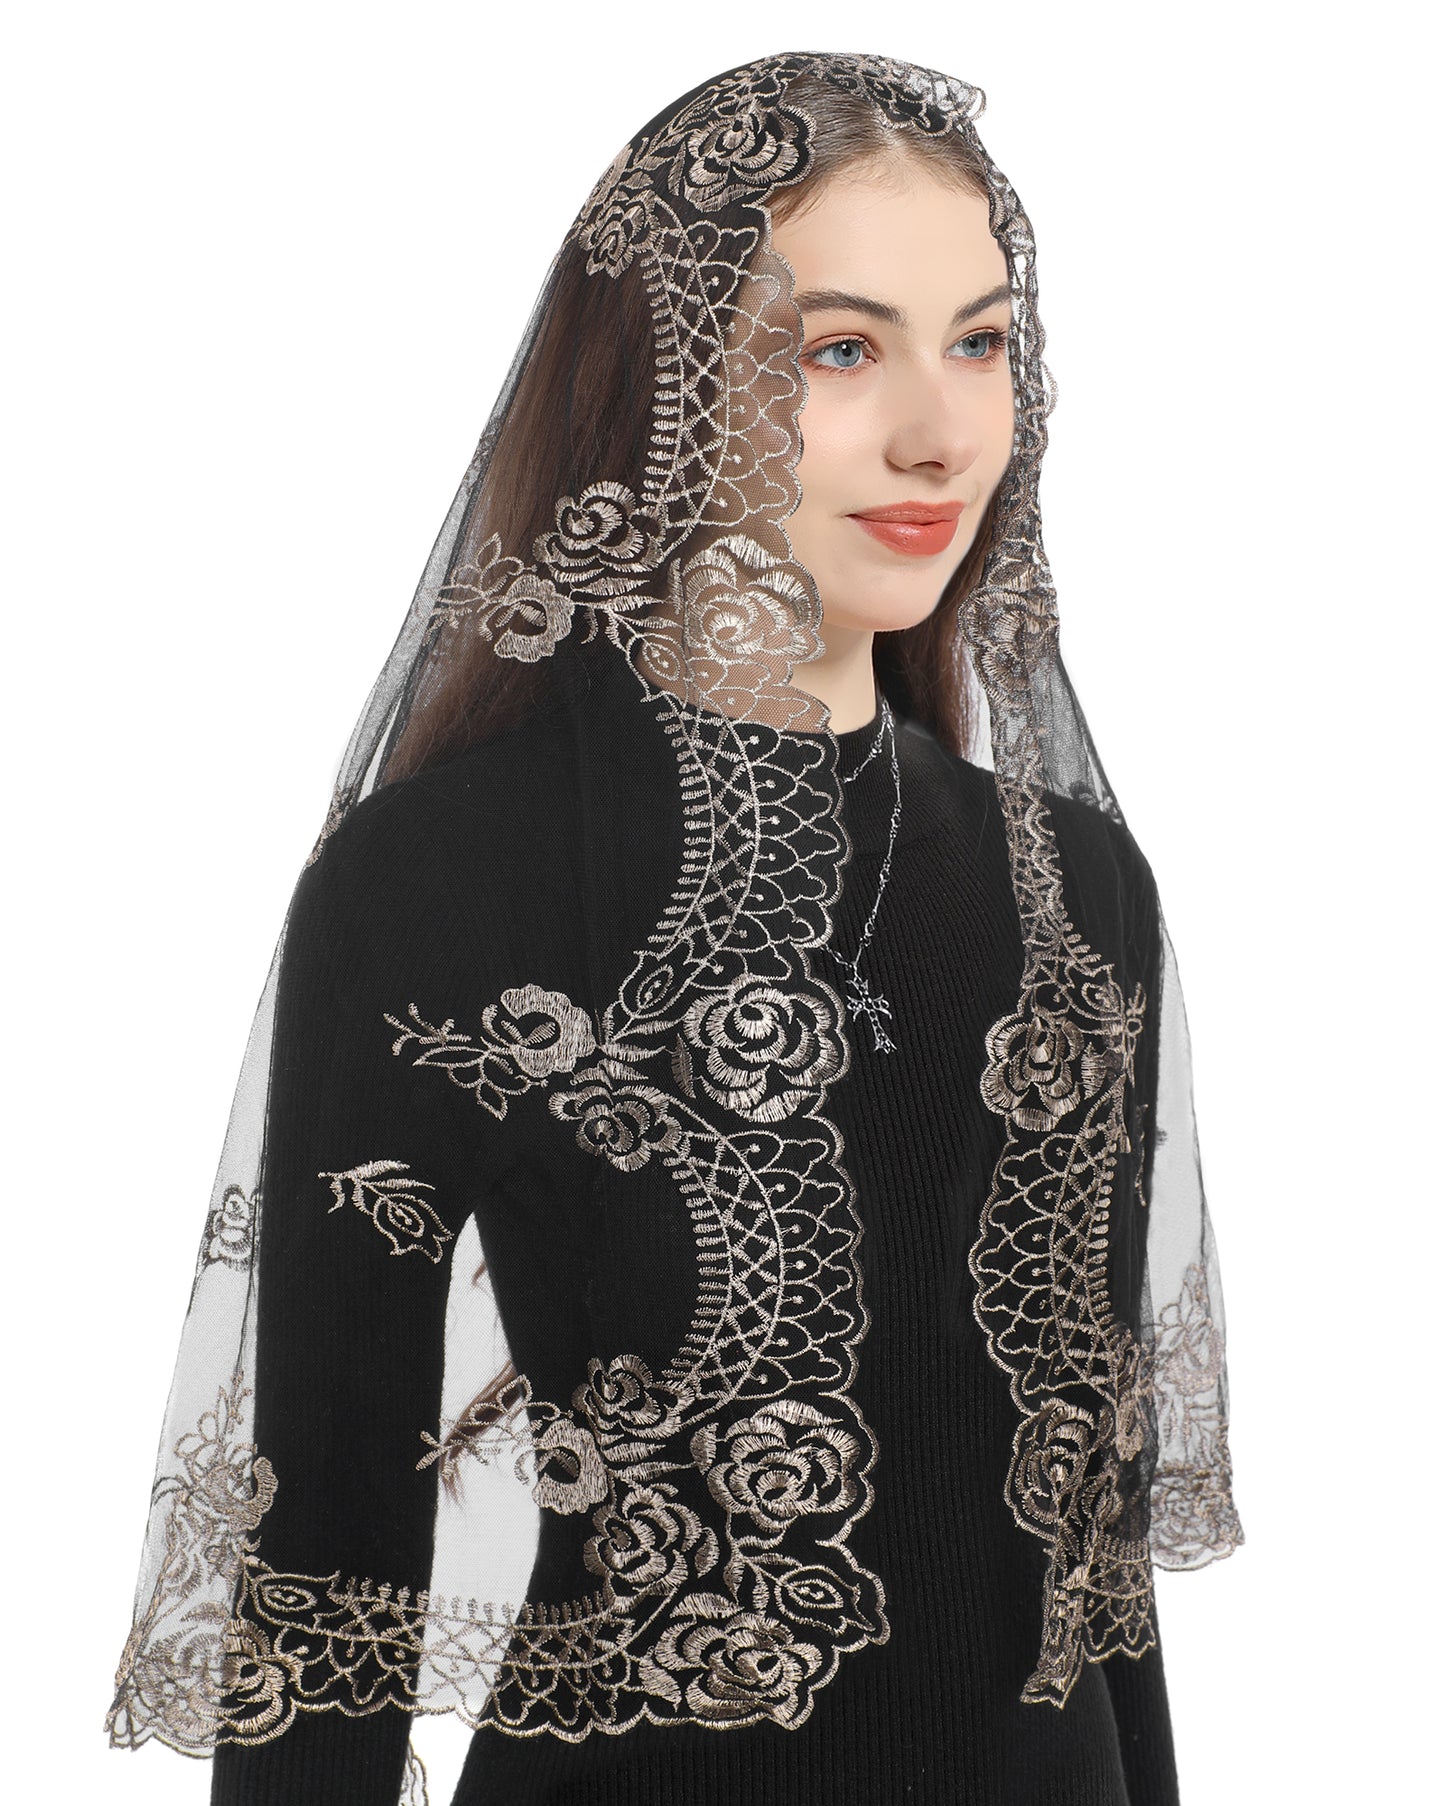 Bozidol Rectangular Embroidered Church Veil - Catholic Headgear Rectangular Embroidered with Our Lady of the Rosary Veil